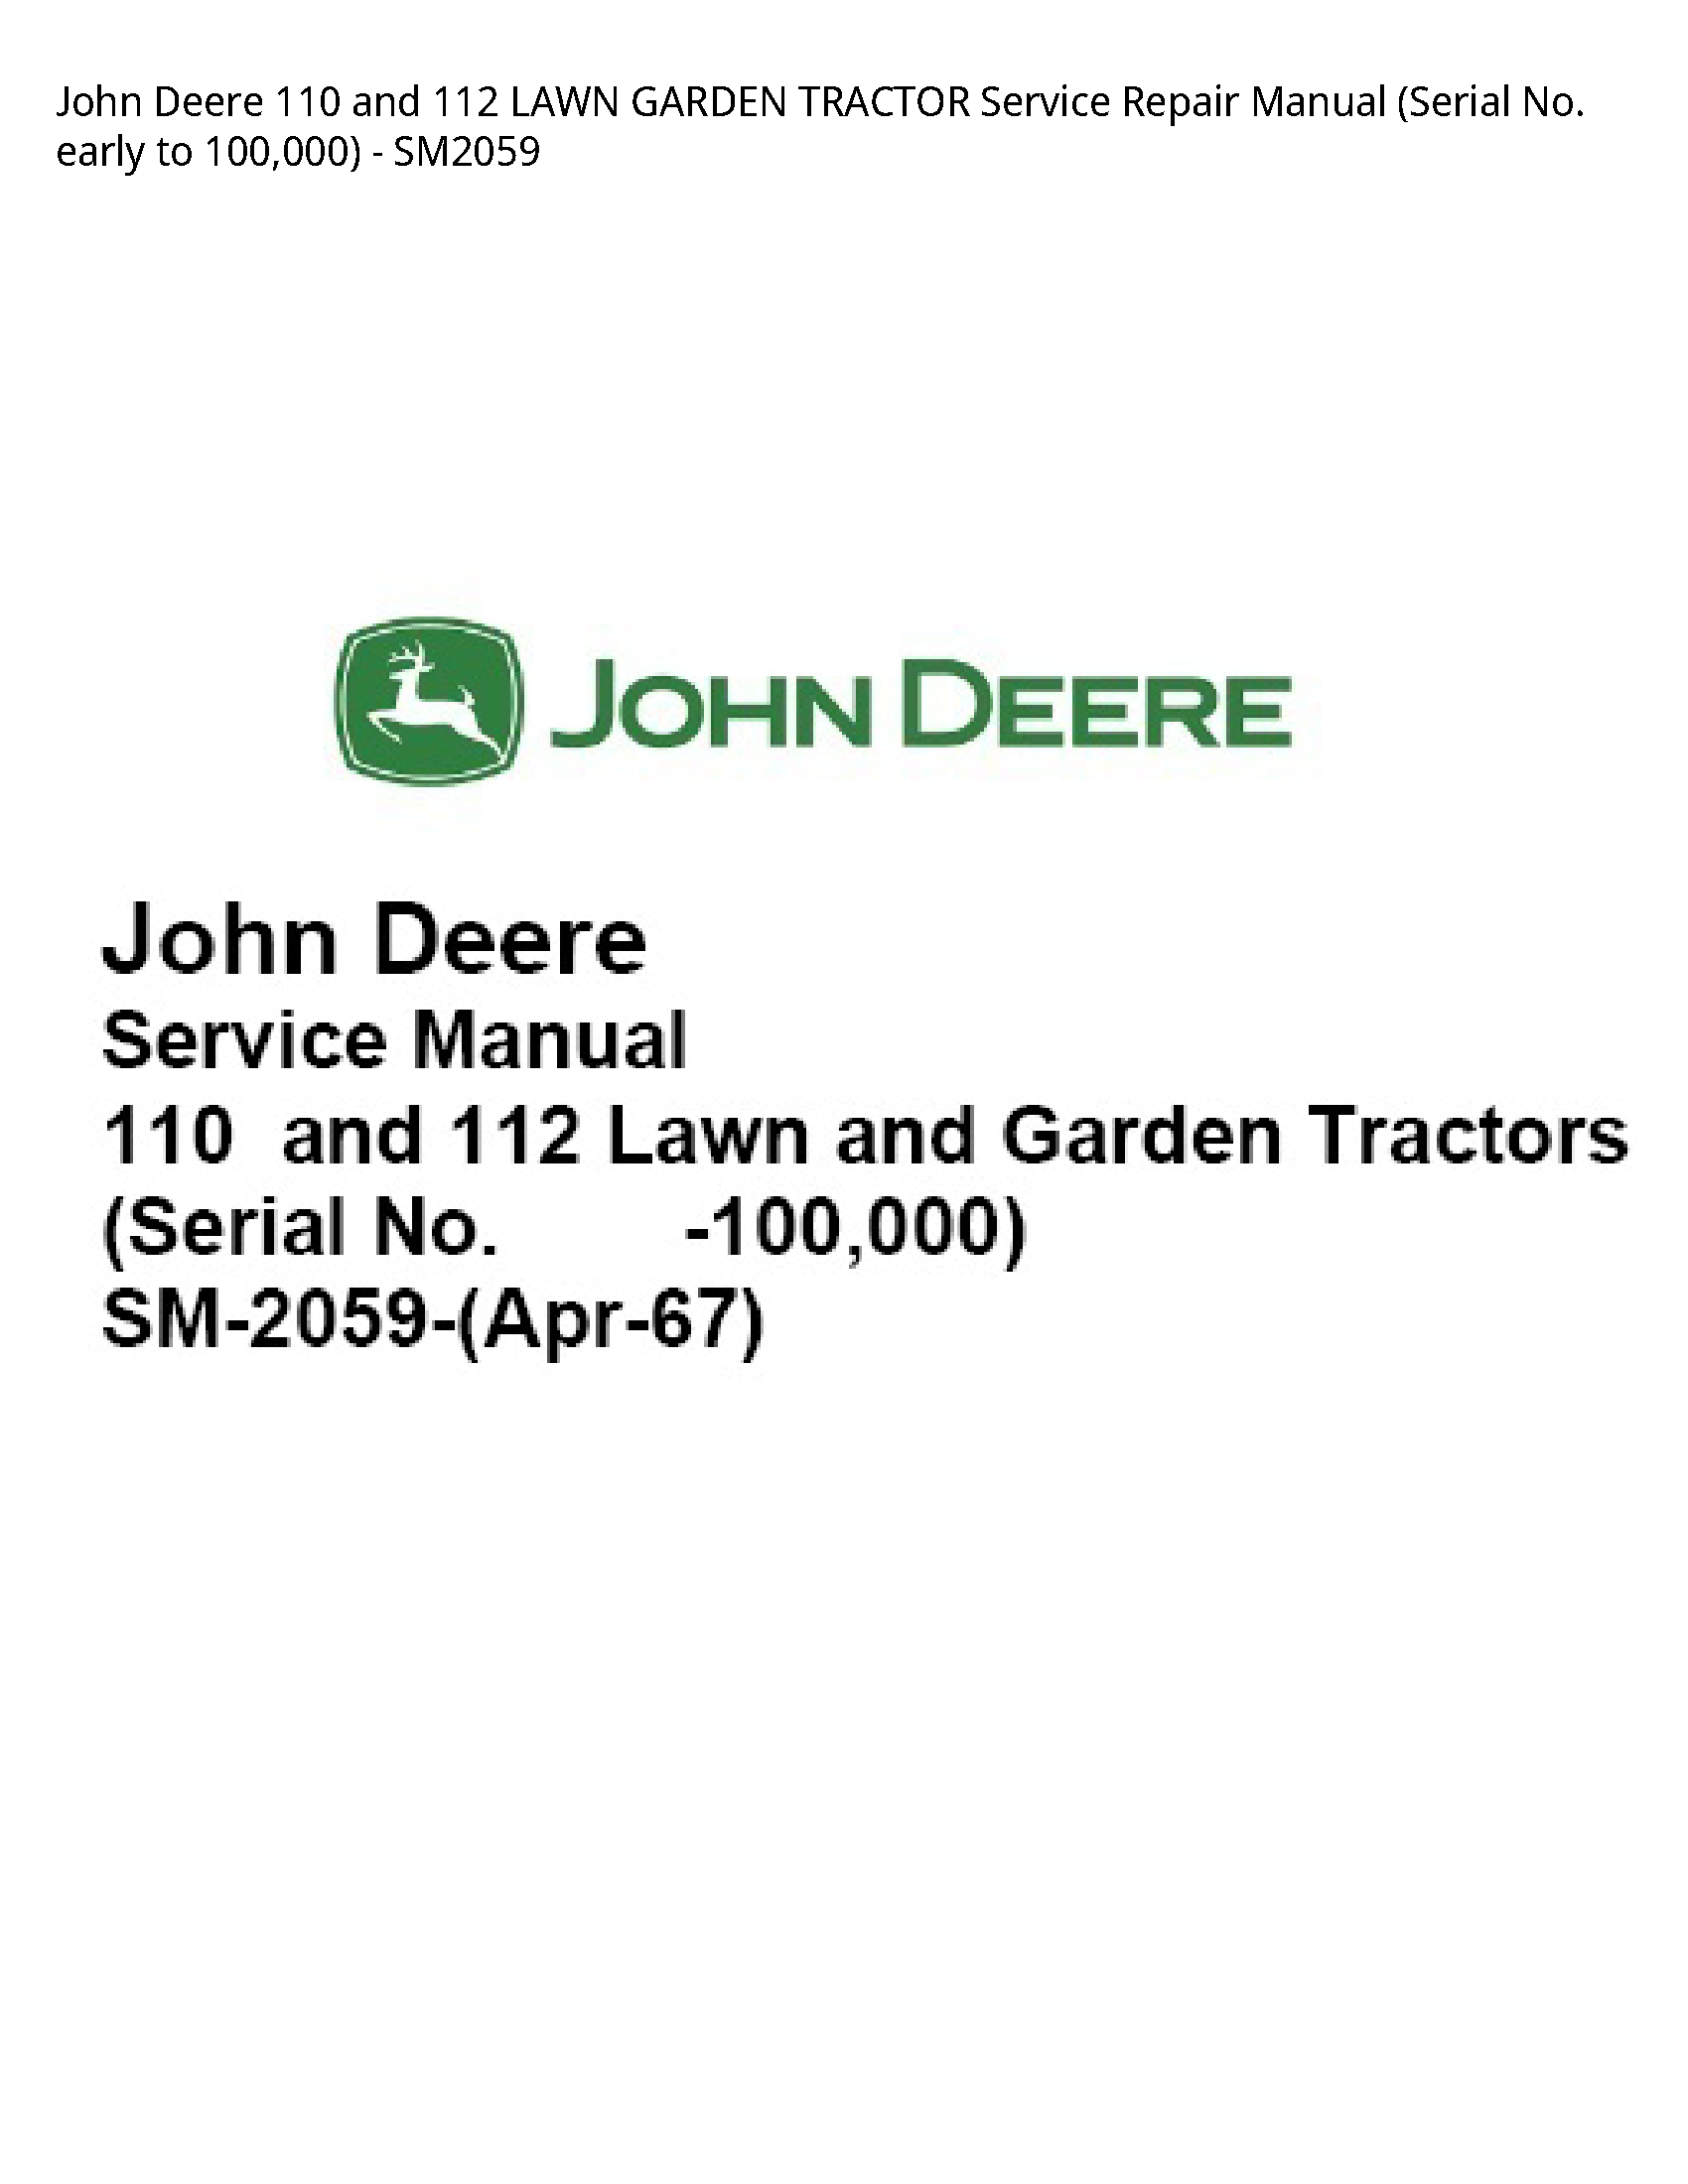 John Deere 110  LAWN GARDEN TRACTOR manual